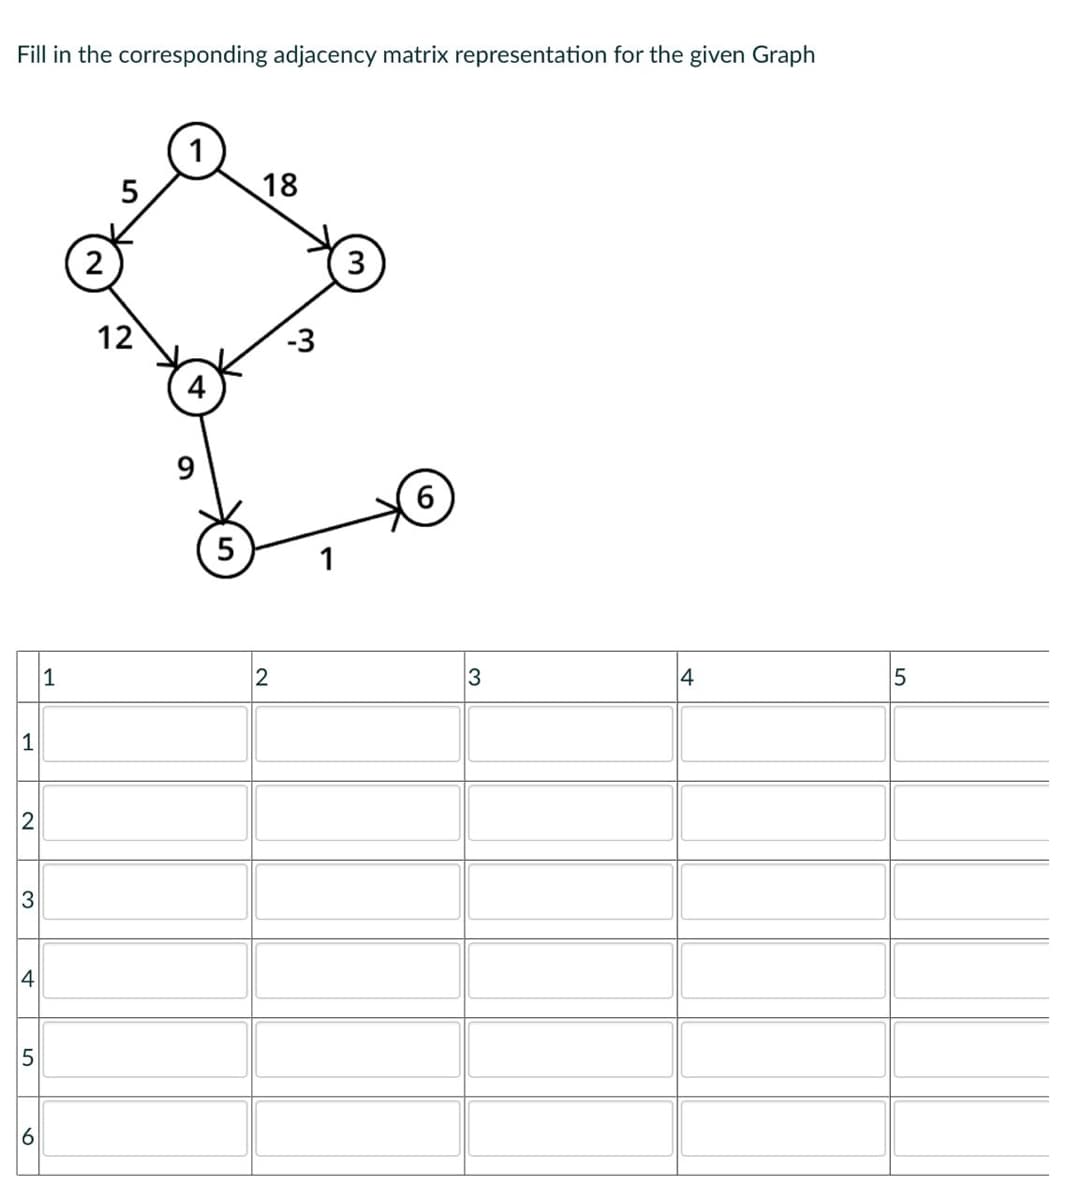 Fill in the corresponding adjacency matrix representation for the given Graph
1
2
3
4
LO
5
6
1
2
5
12
5
18
2
3
4
5